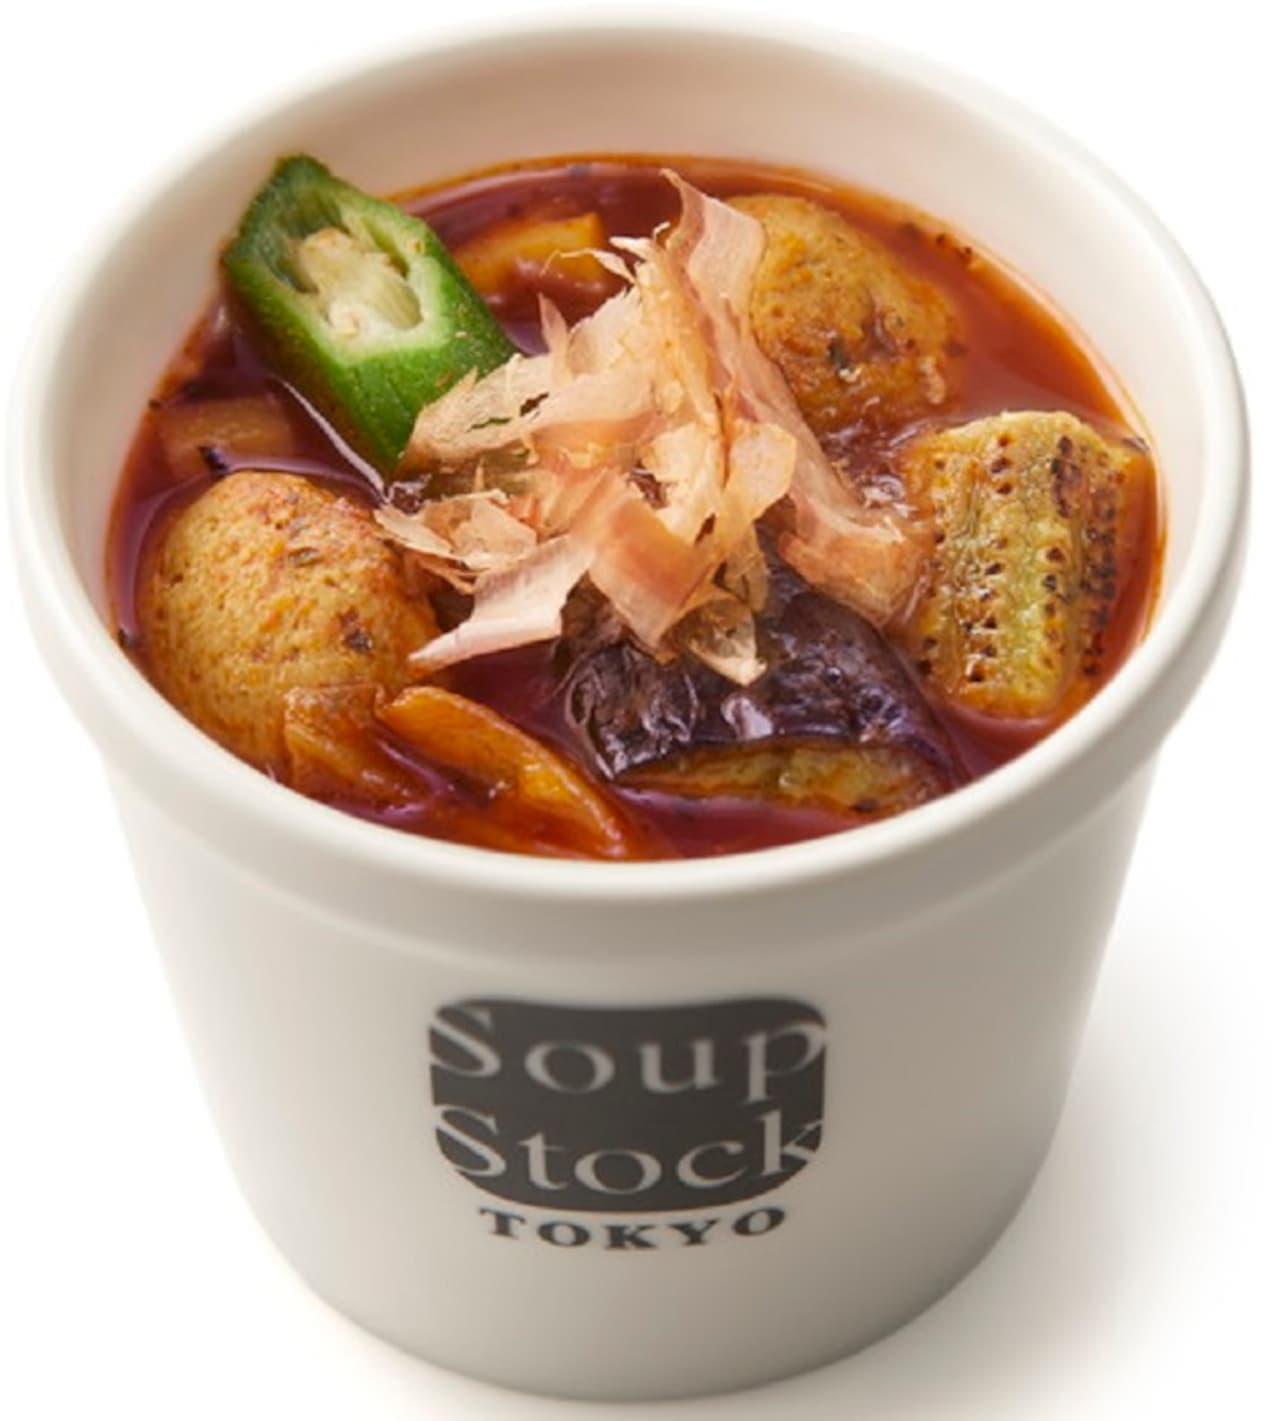 Soup Stock Tokyo「長崎県五島産すり身団子のスープカレー」